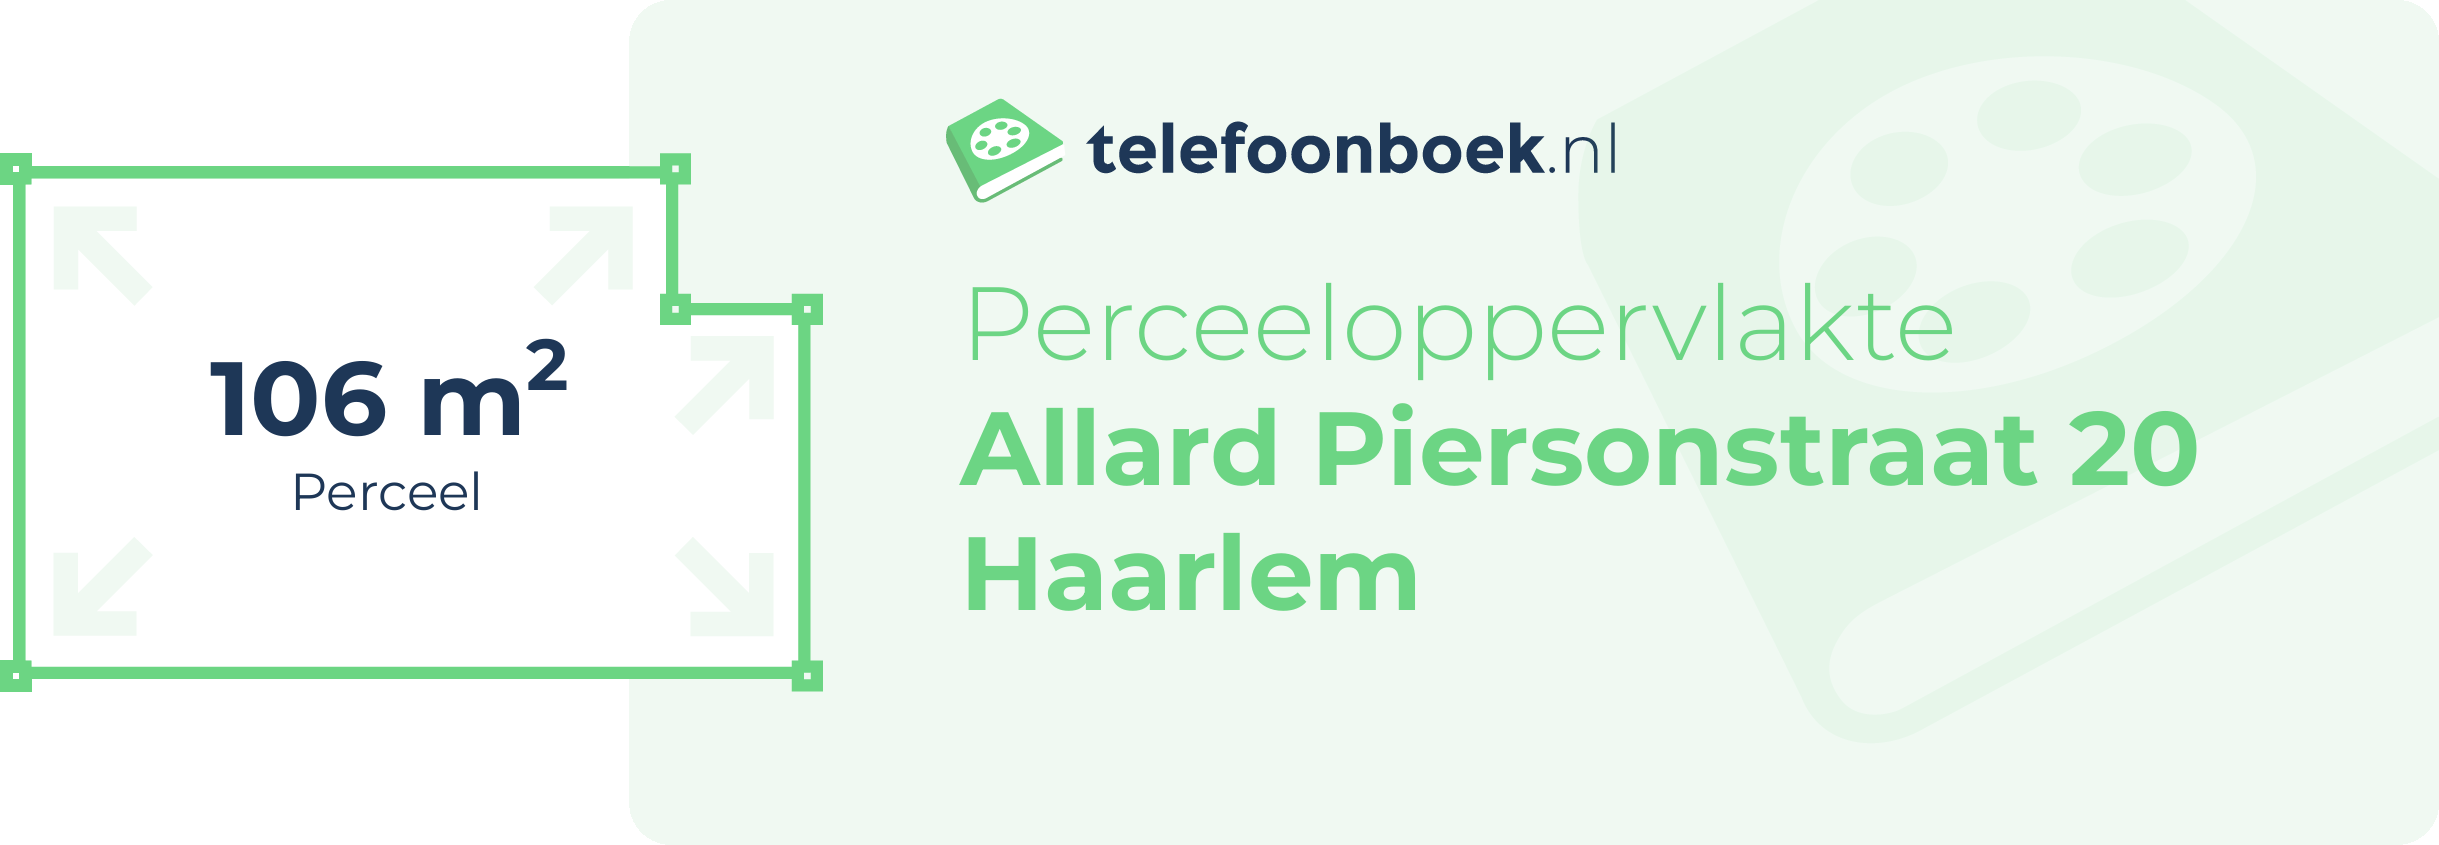 Perceeloppervlakte Allard Piersonstraat 20 Haarlem